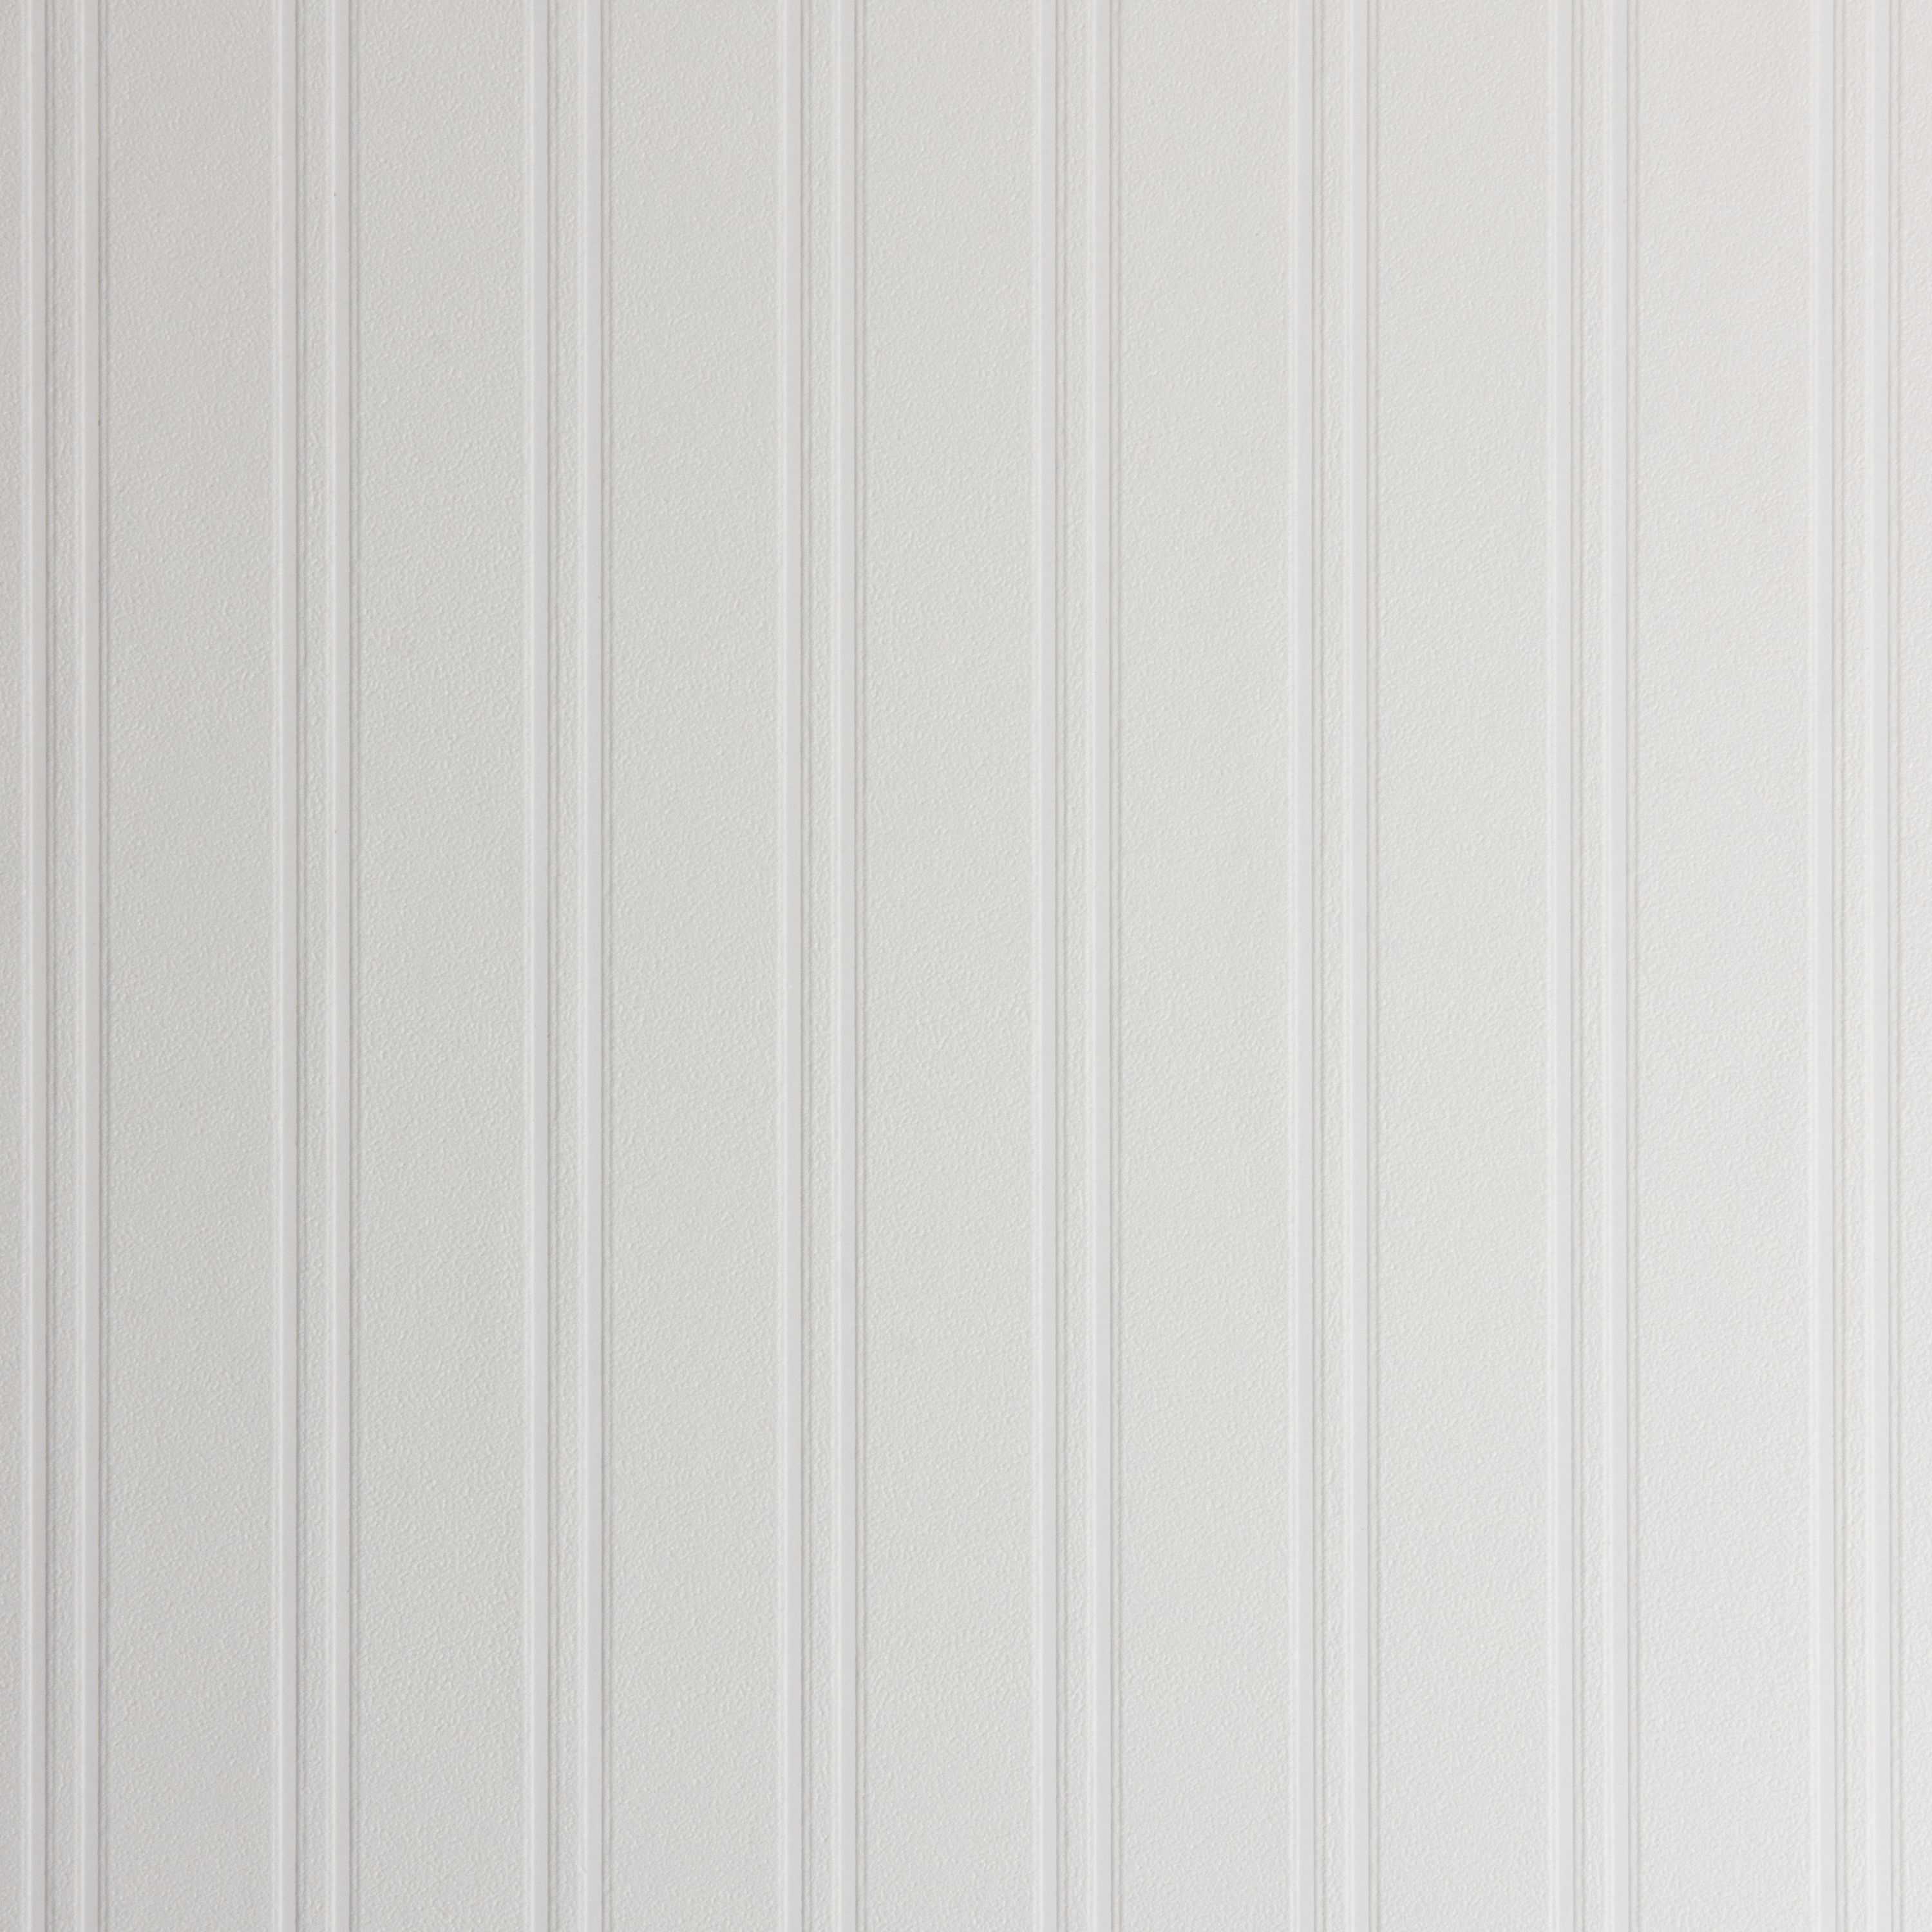 Eurotex Textured PVC Coated 3D Design Wallpaper for Walls Home Decoration  57sqftPer roll231503  Amazonin Home Improvement